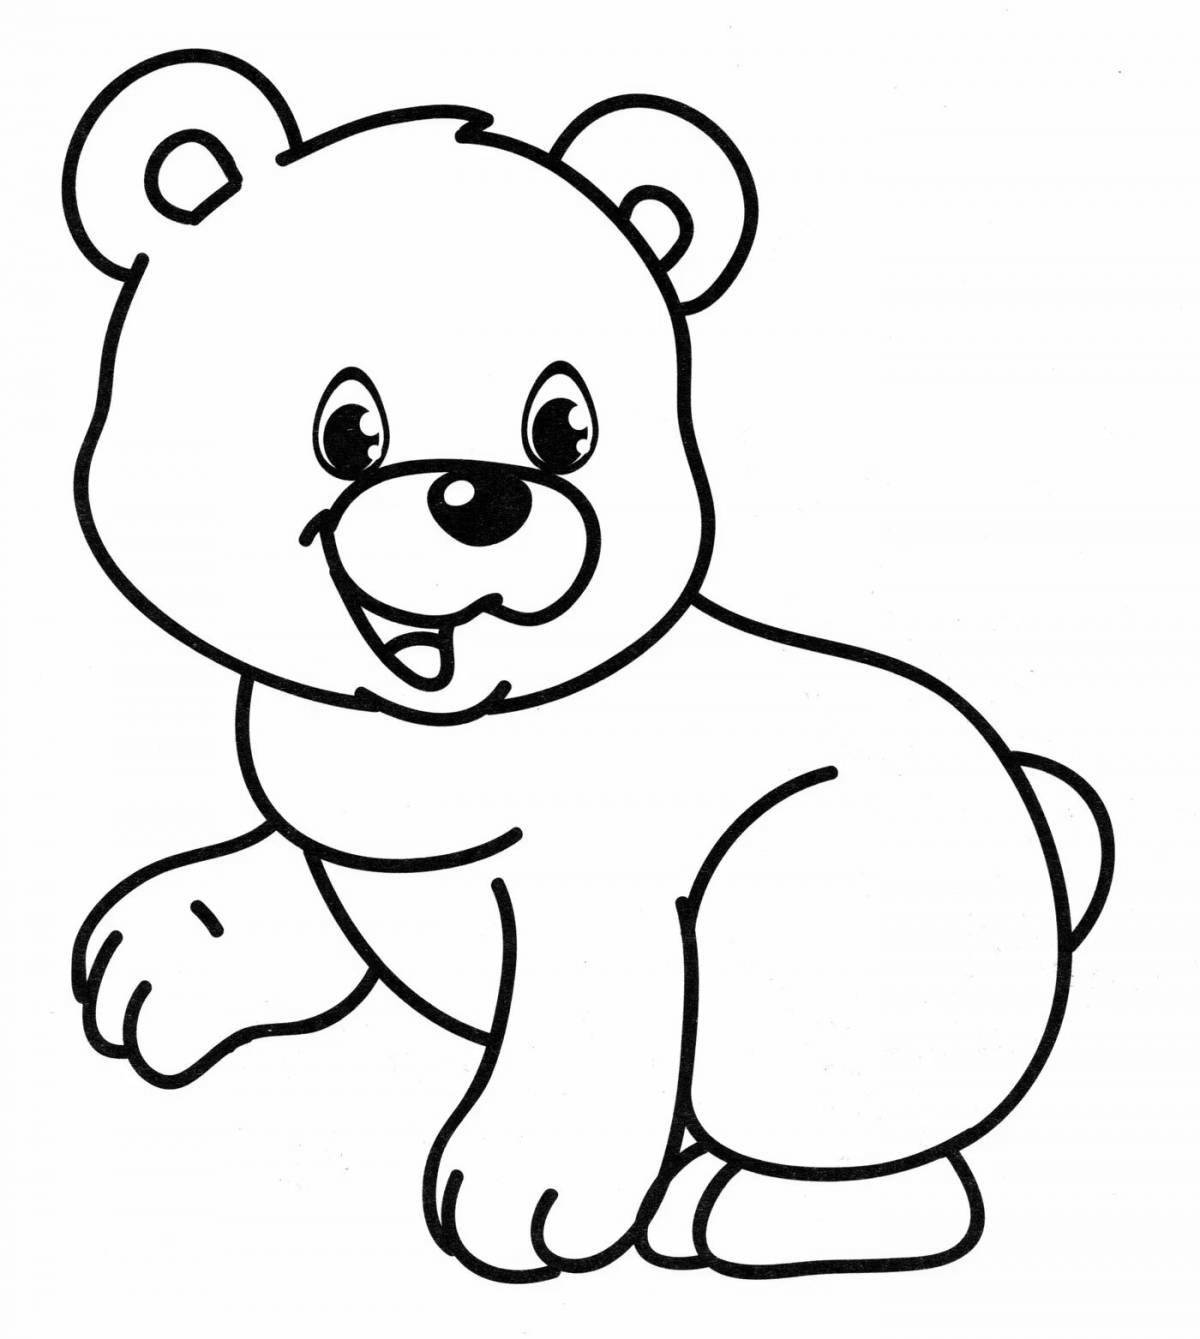 Drawing of a joyful bear